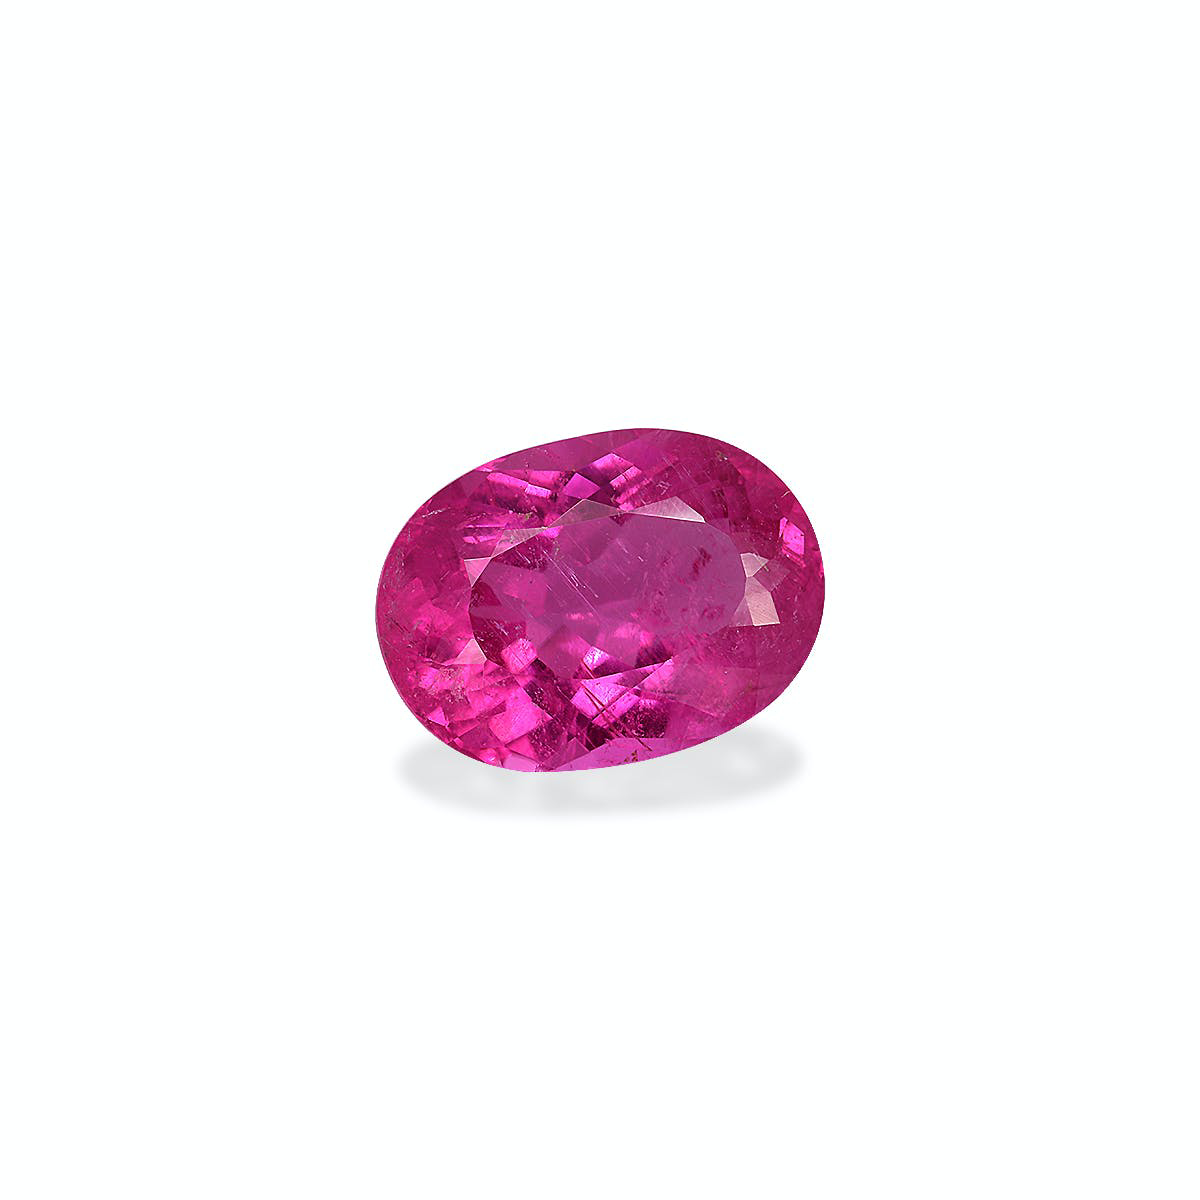 Picture of Vivid Pink Rubellite Tourmaline 7.29ct (RL0822)